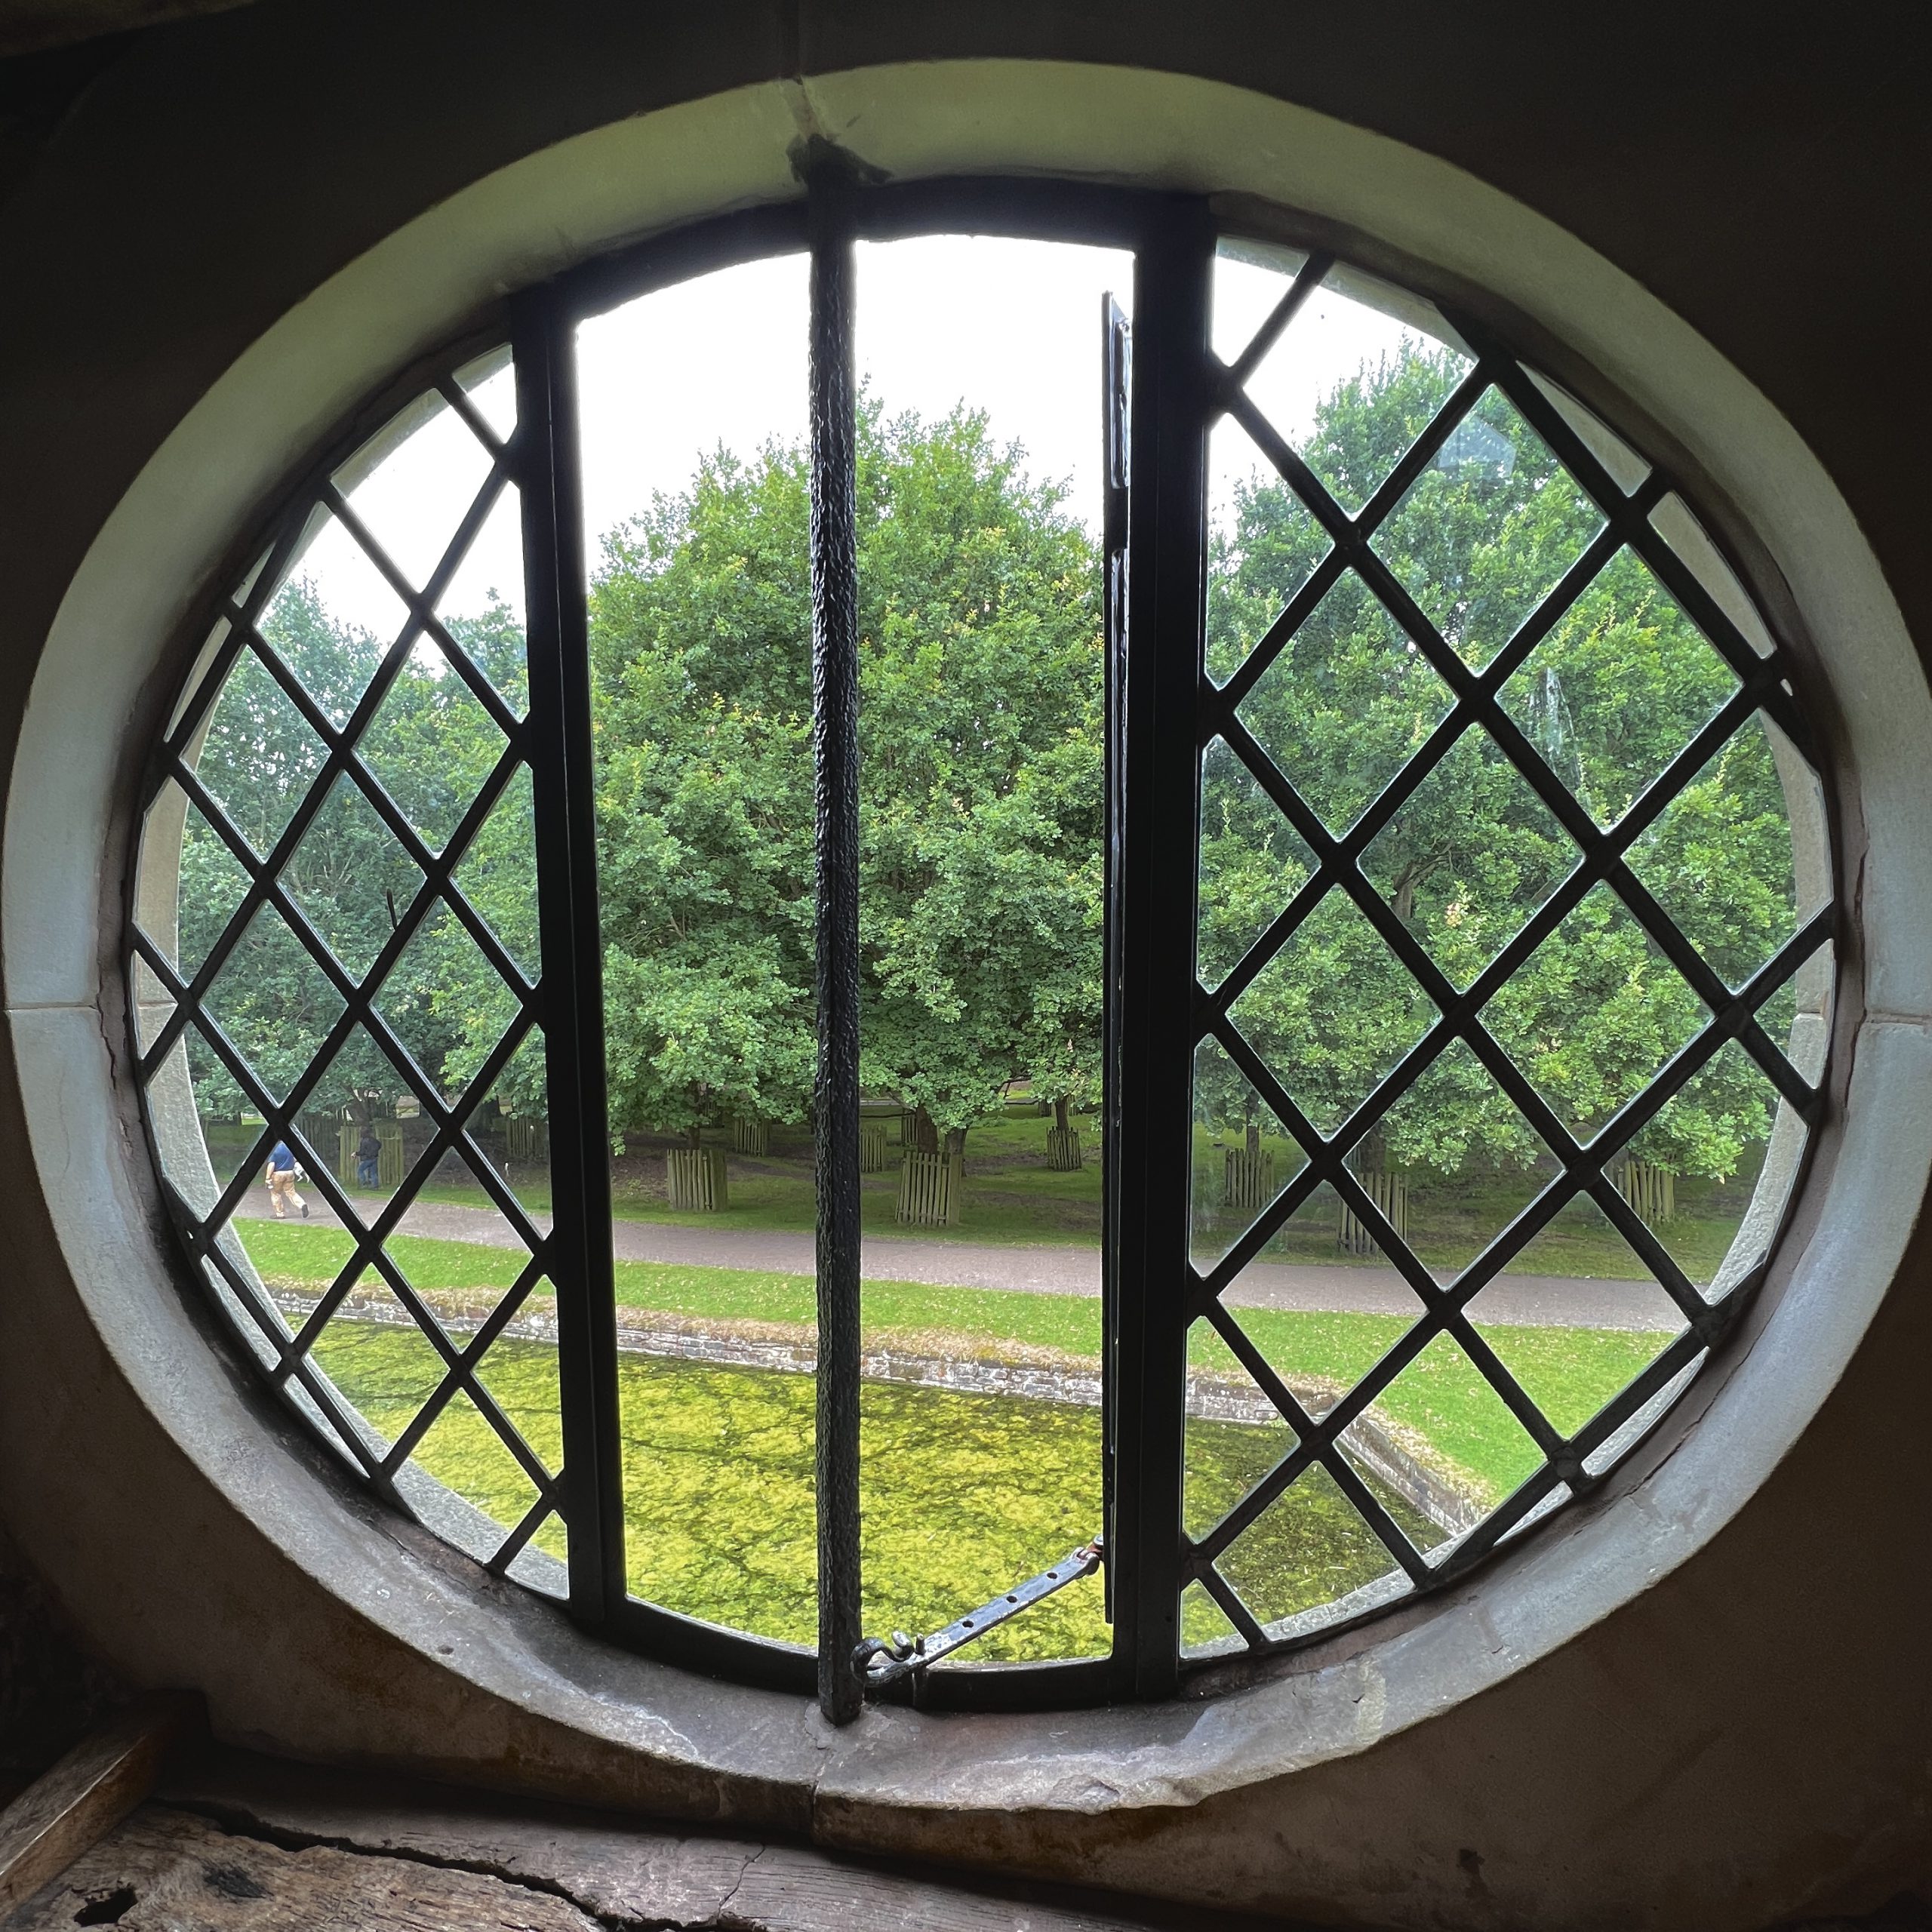 Through the Round Window